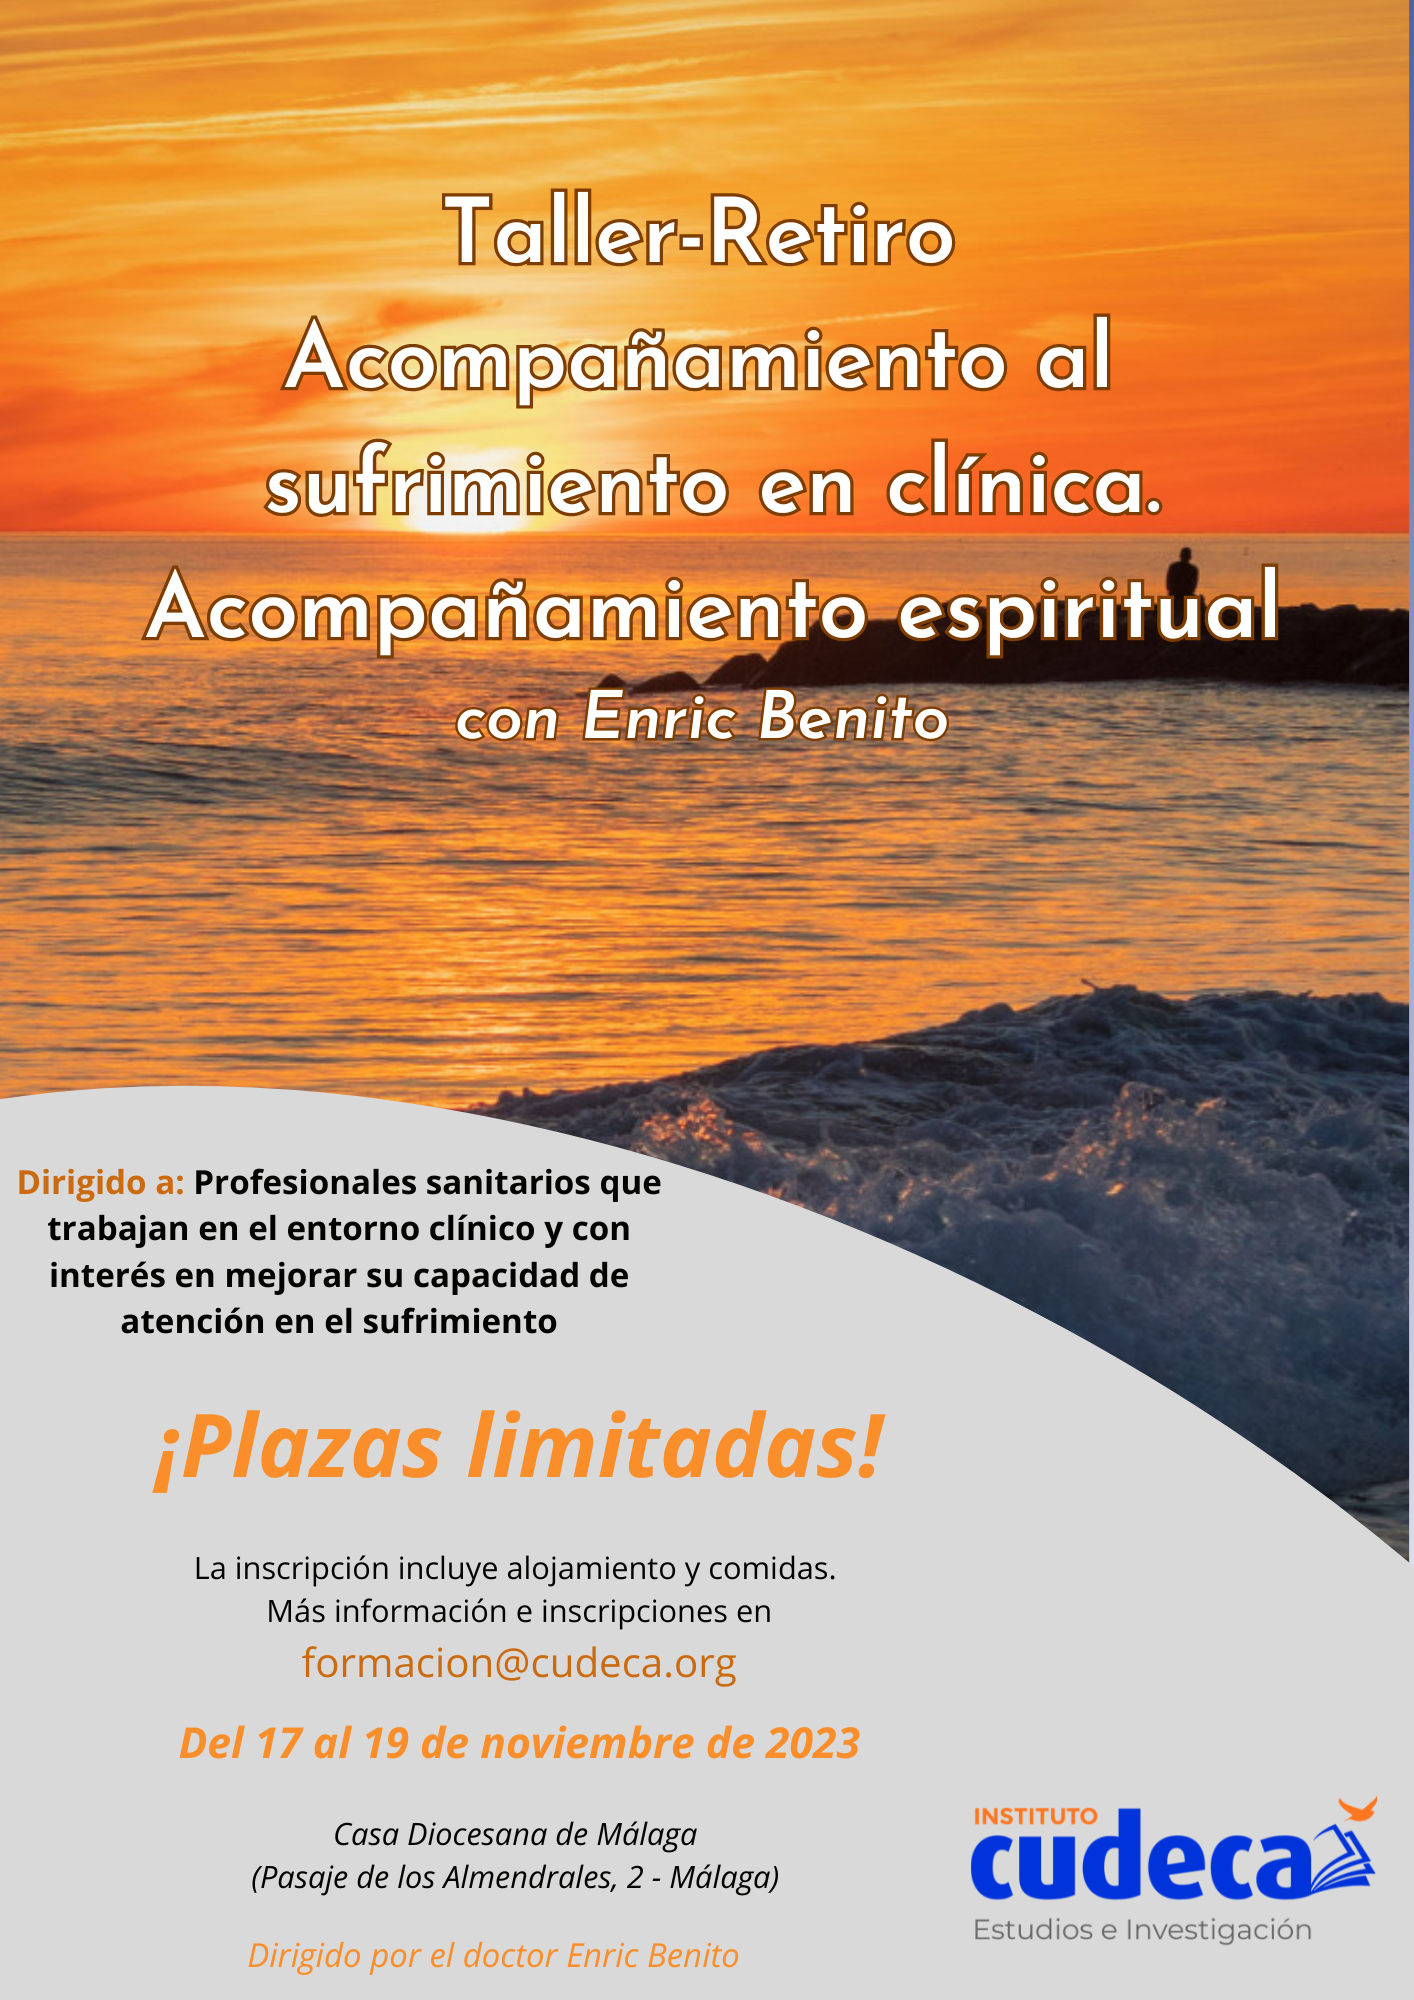 Cudeca organises a retreat on spiritual accompaniment with Enric Benito